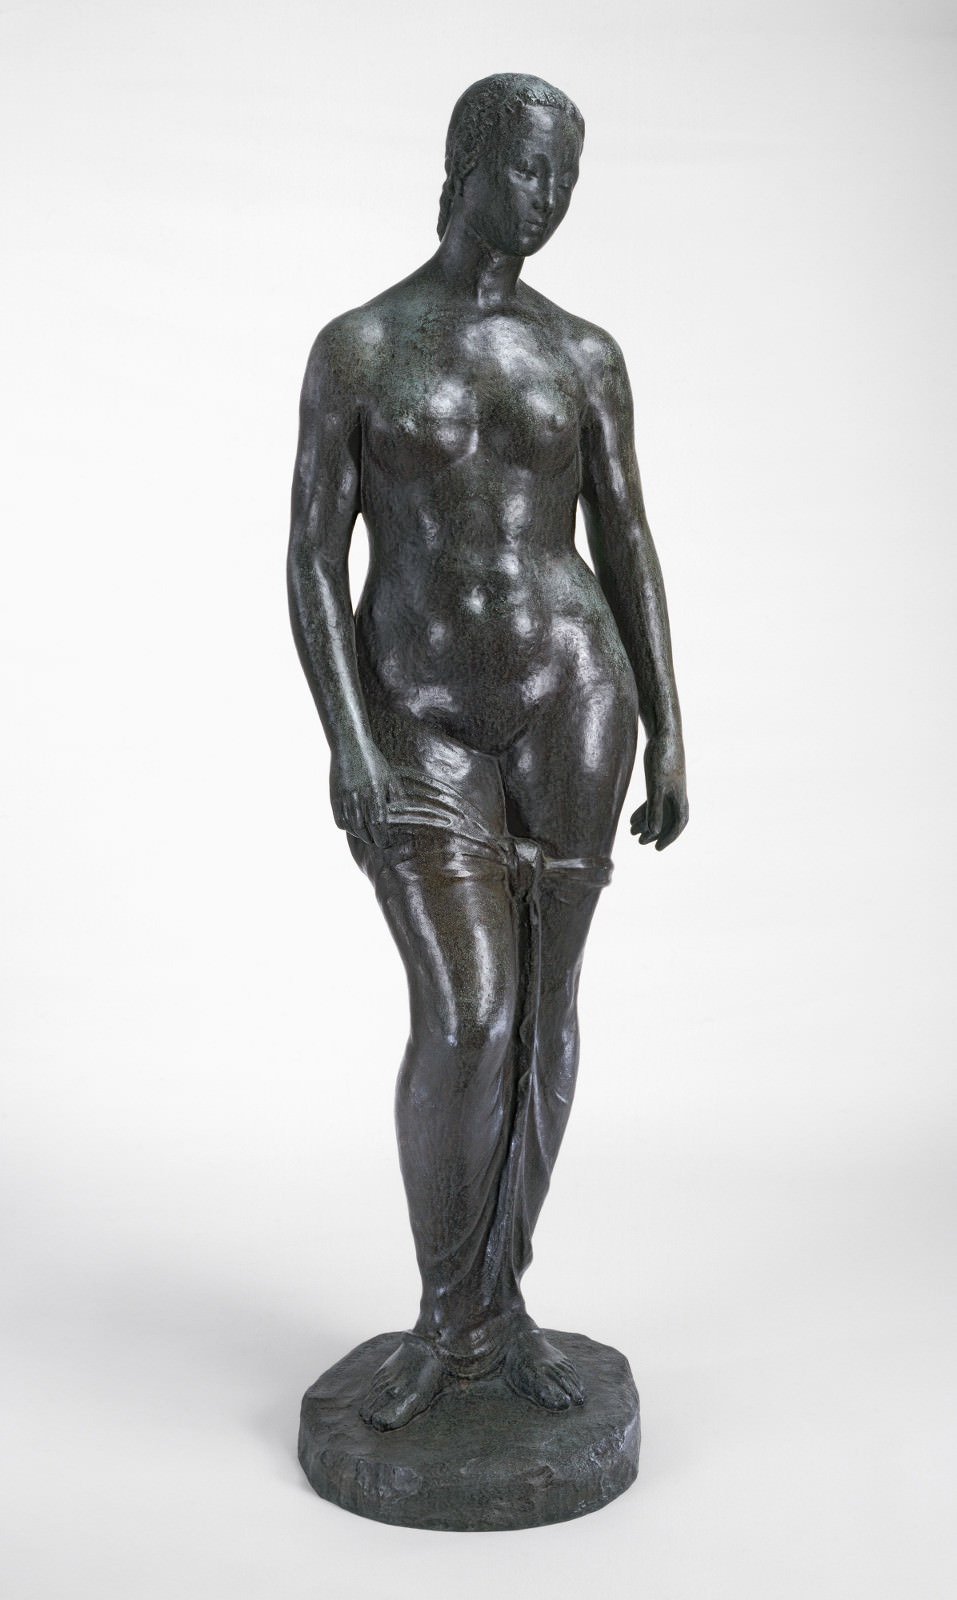 Figue. 3 - Homme debout, Wilhelm Lehmbruck, 1910, Bronze, 191.2 x 54 x 39.9 cm. National Gallery of Art, Washington. Ailsa Mellon Bruce Fonds.